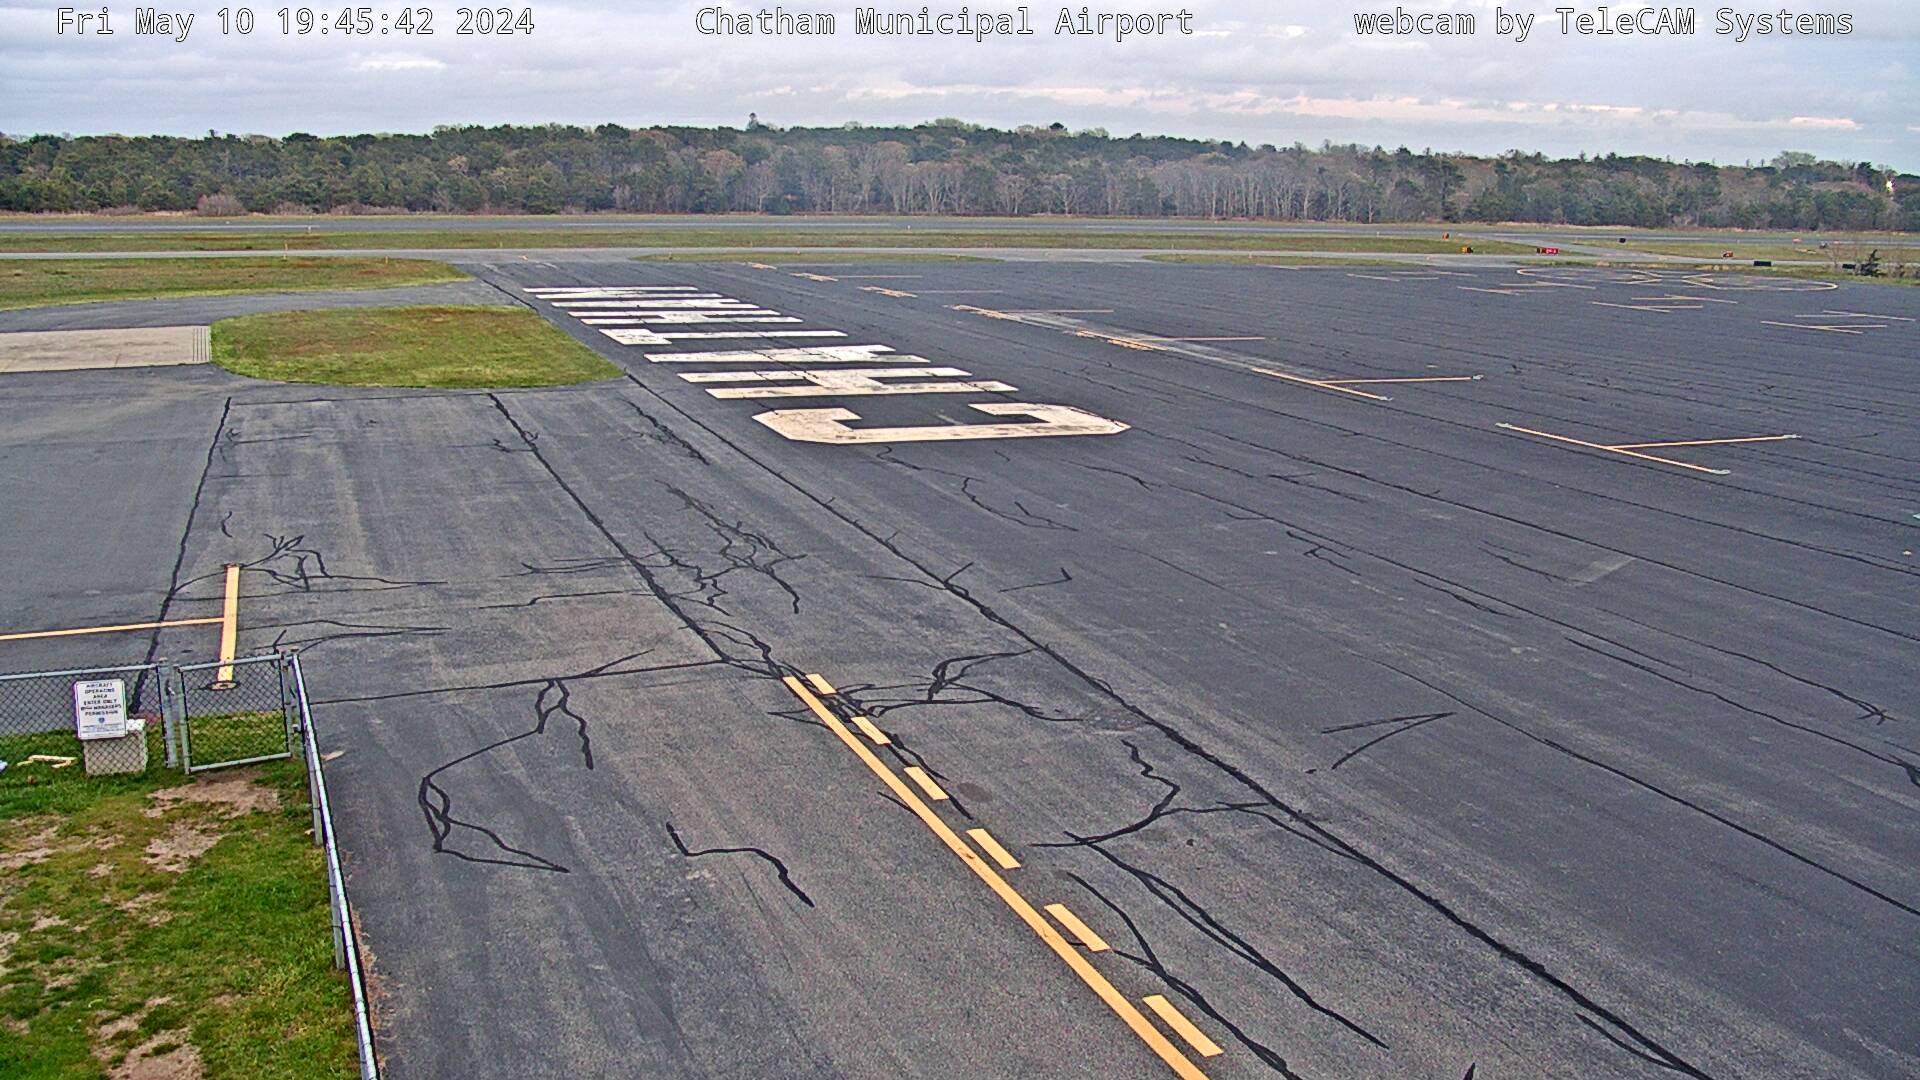 USA Chatham Municipal Airport webcam